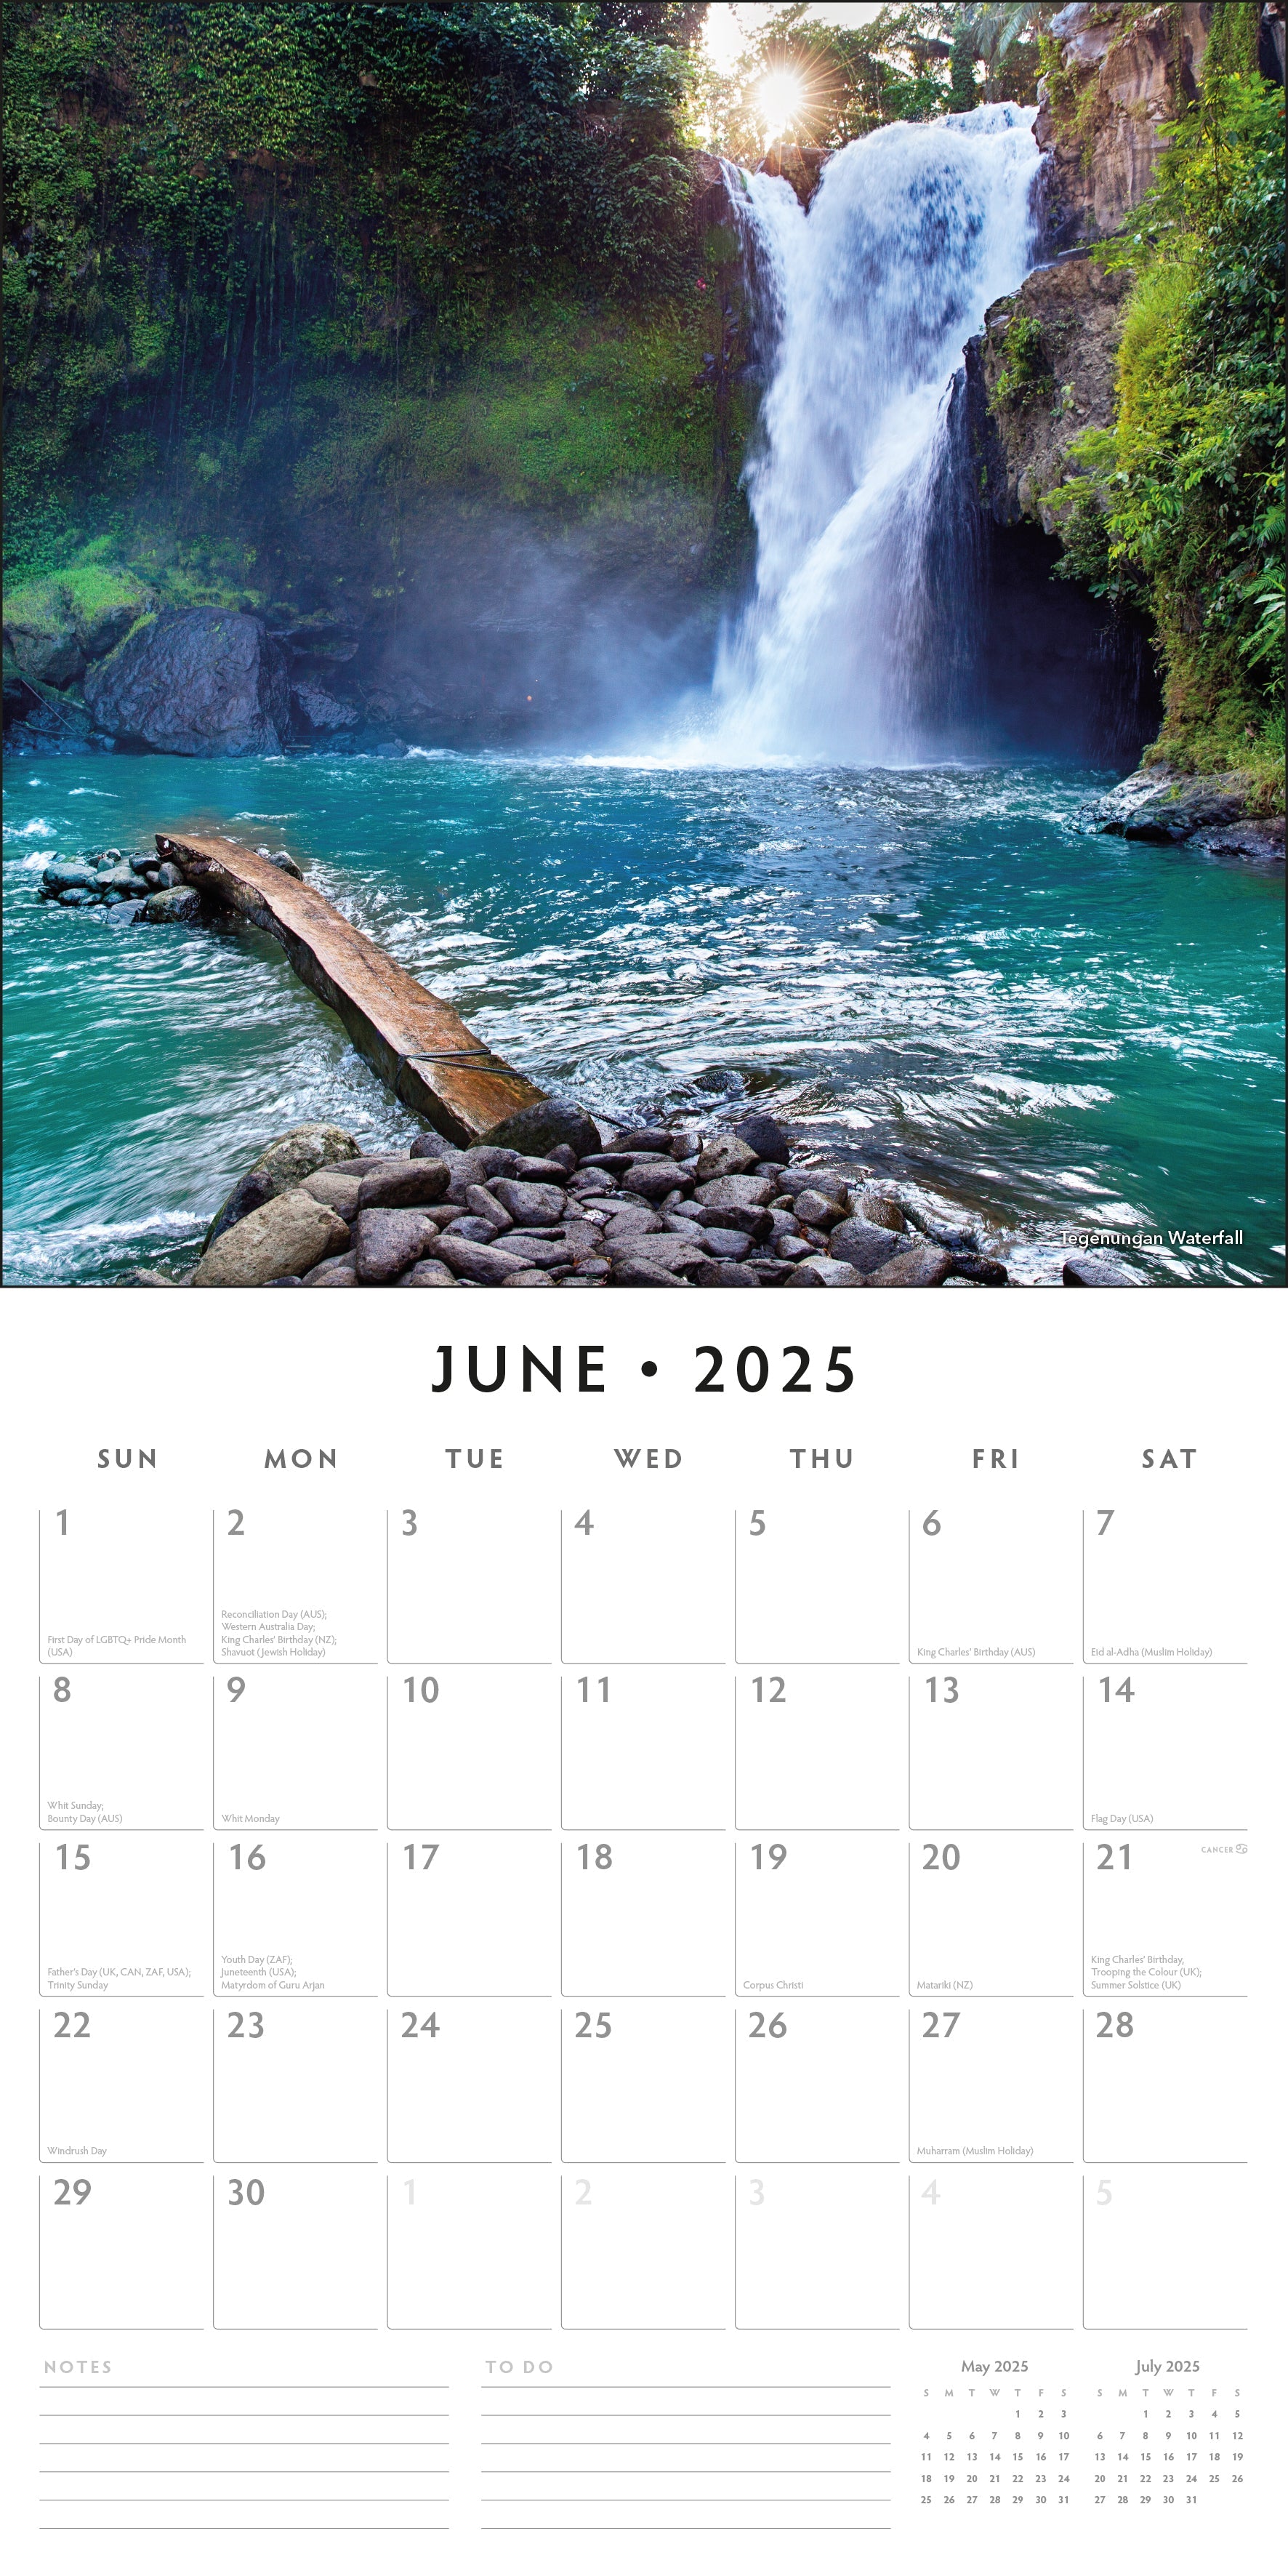 2025 Bali - Square Wall Calendar